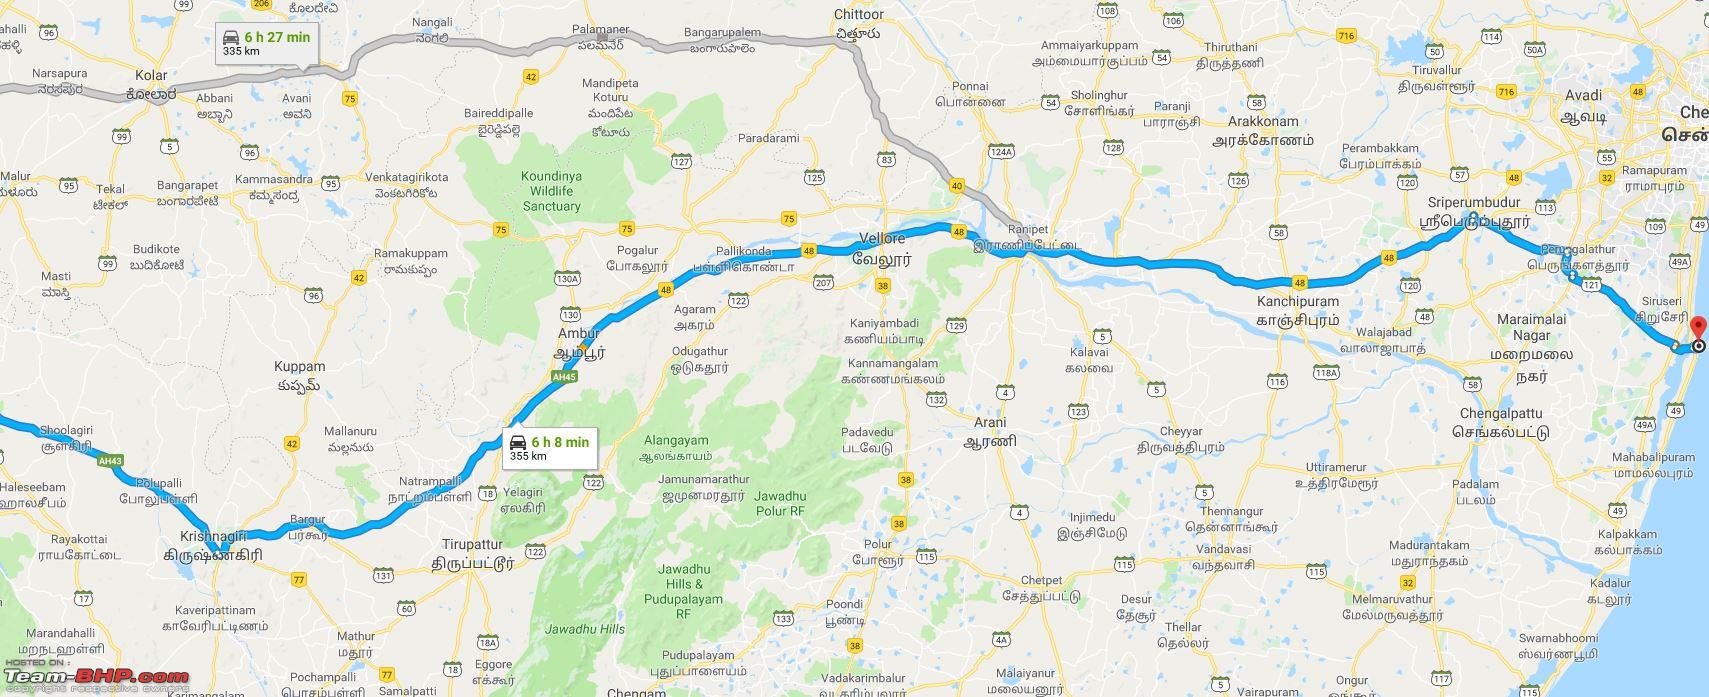 Road Map From Bangalore To Chennai Bangalore   Chennai   Bangalore : Route Queries   Page 199   Team BHP